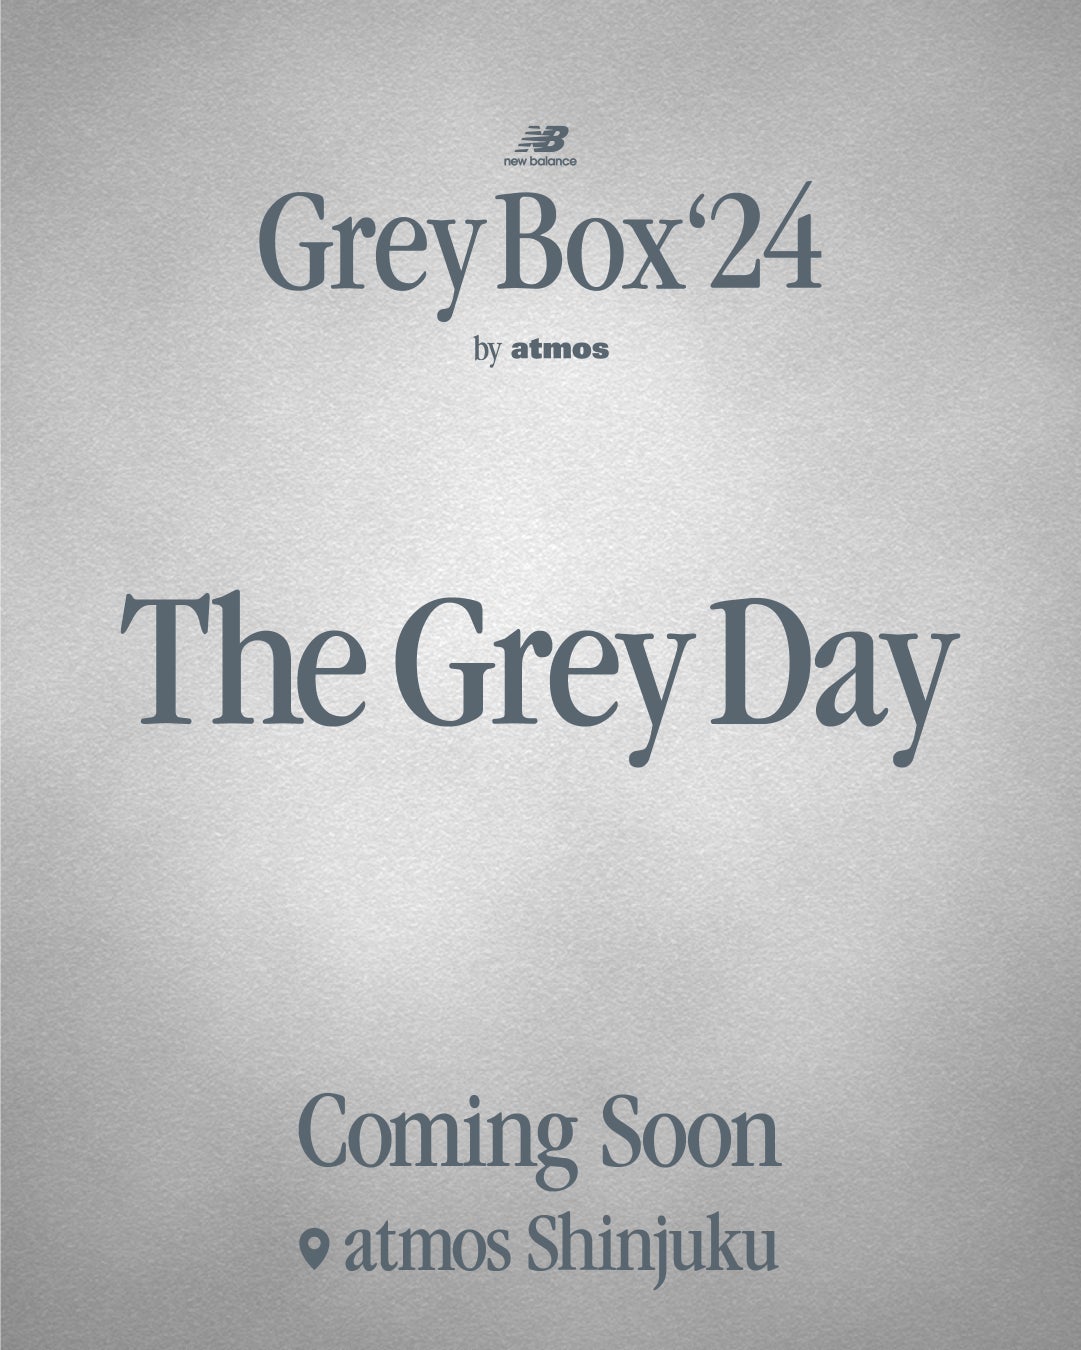 New Balanceの「Grey Box’24」キャンペーンを今シーズンもatmosで開催